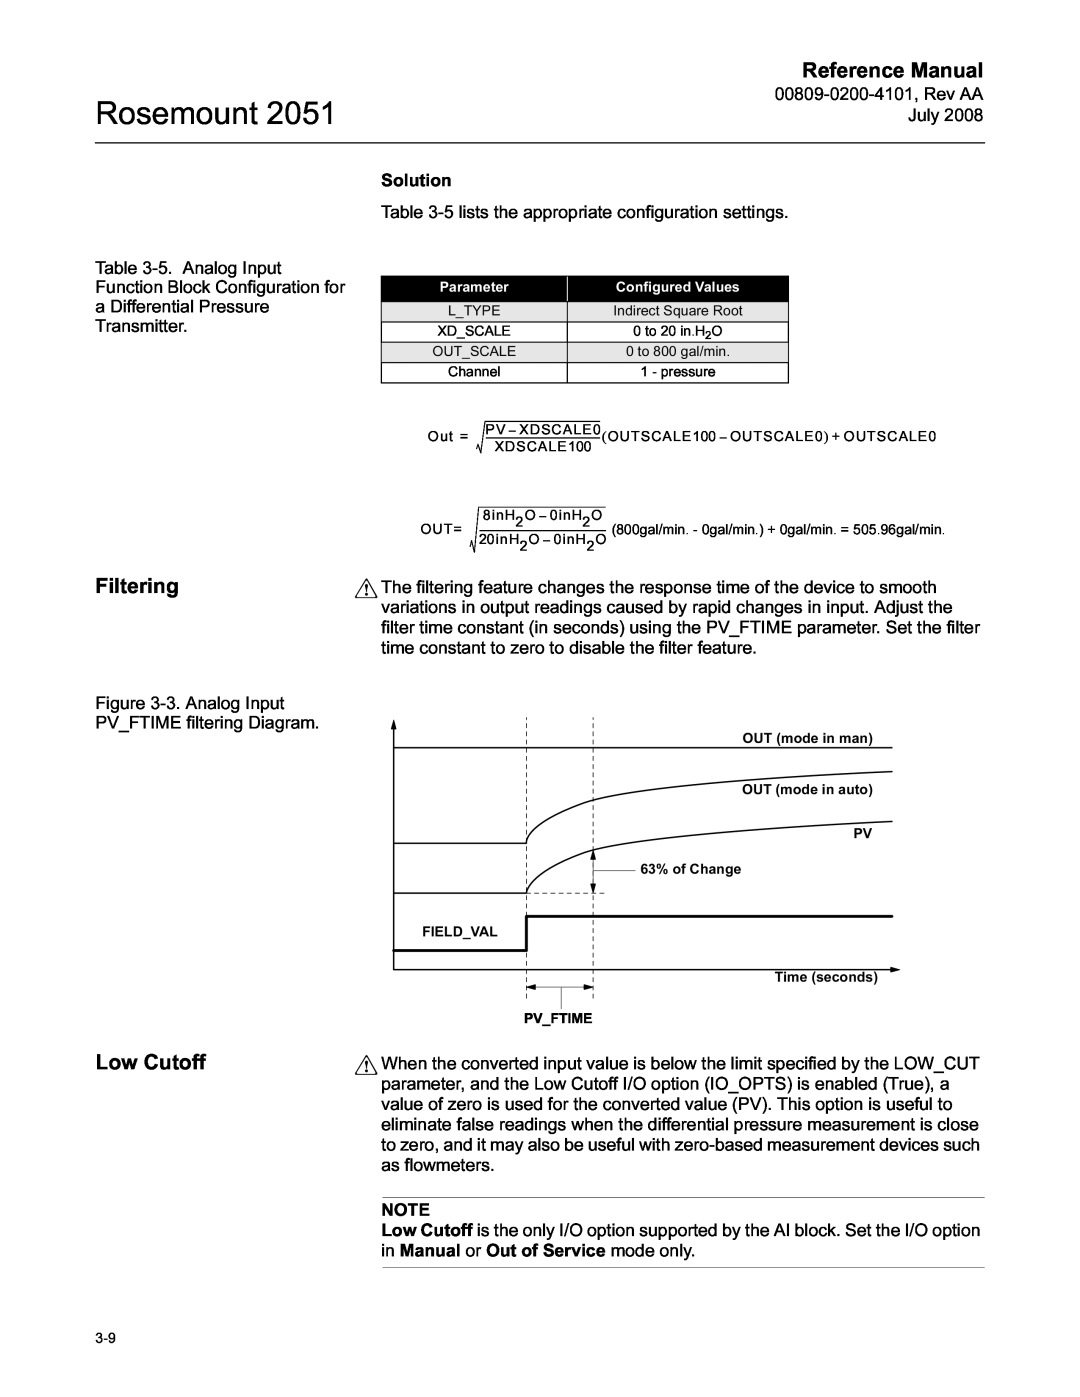 Emerson Process Management 2051 manual Filtering, Low Cutoff, Rosemount, Reference Manual 